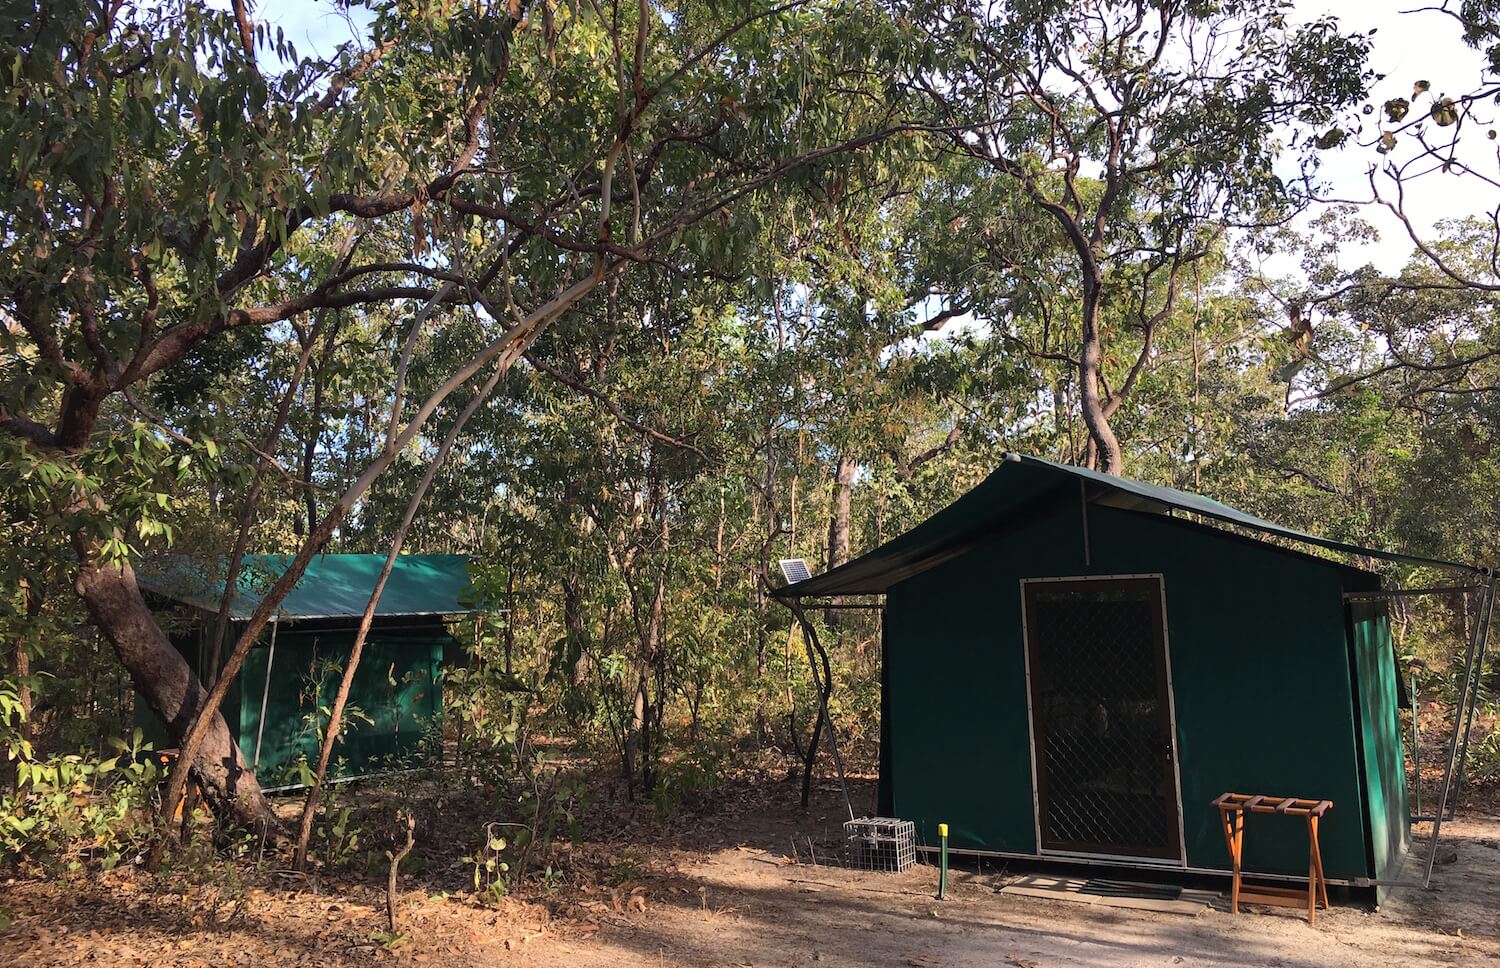 The huts at Sab's campsite with mesh walls.